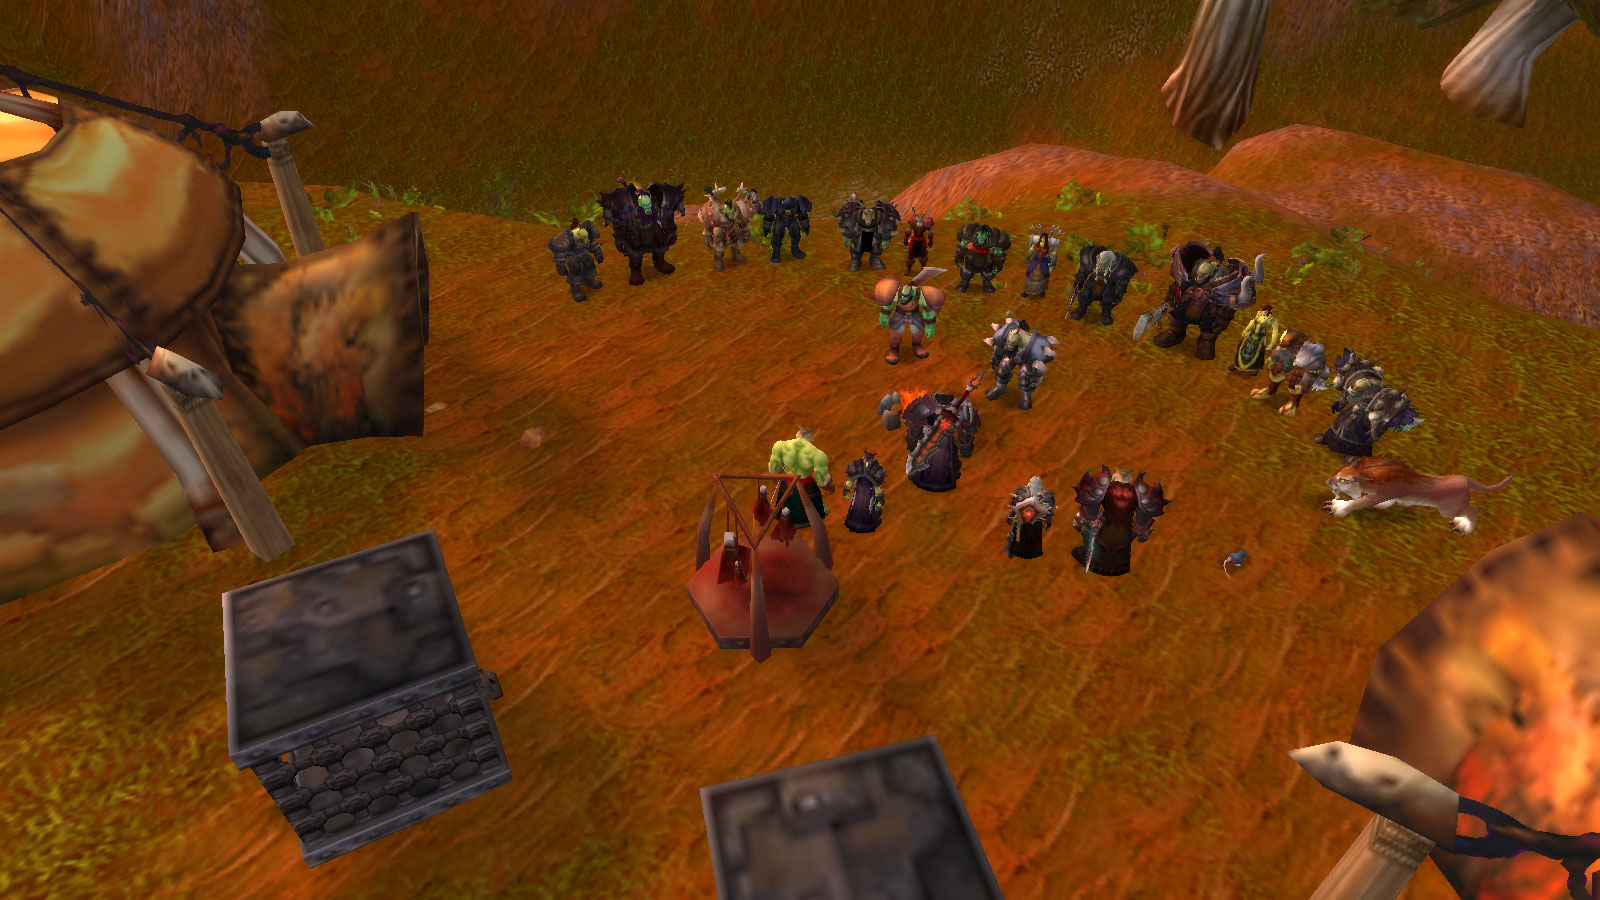 Thats a lot of Orcs...